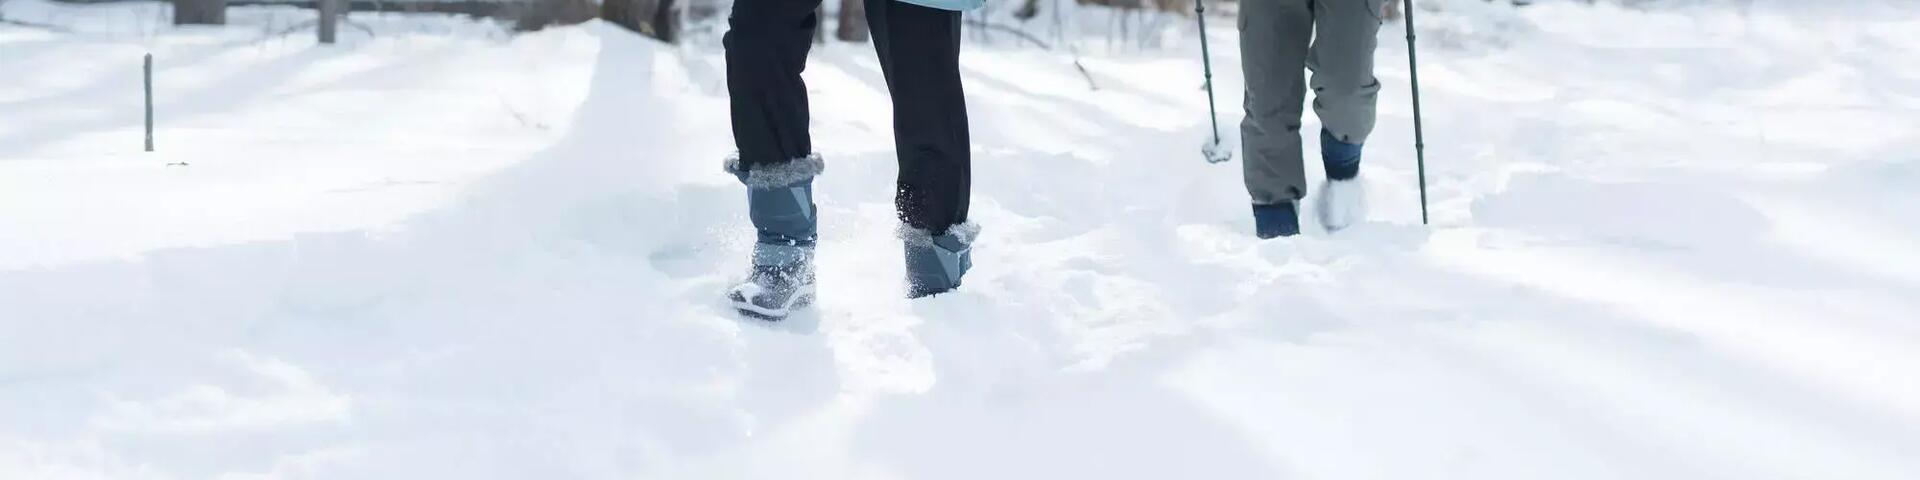 tb-wandelen-sneeuw-schoenen-kiezen